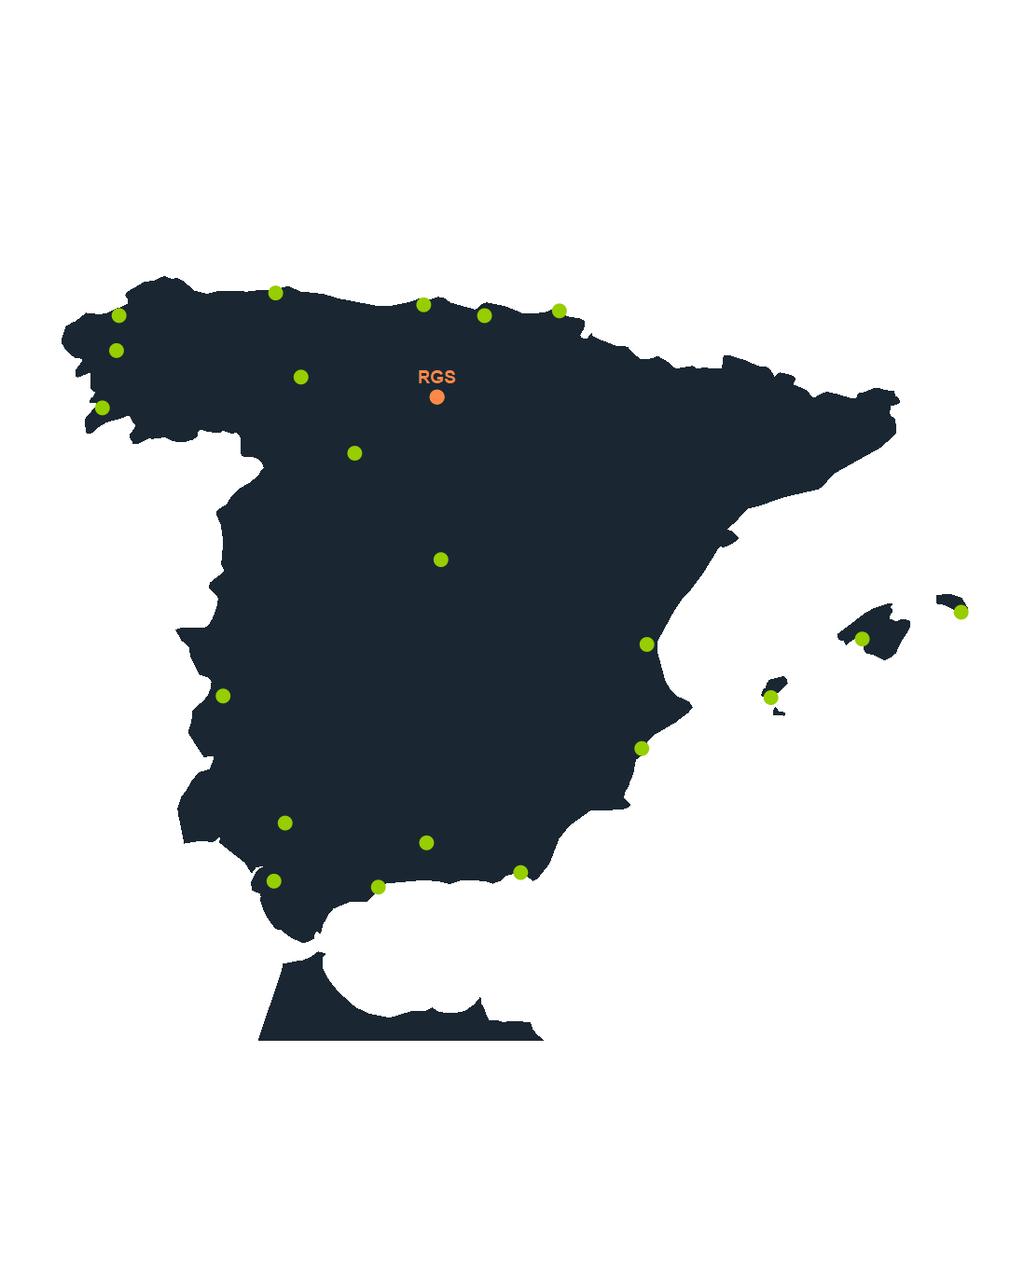 18/2/2019 MAP (España) Route map Domestic 2018 Pax 13,5M Share 27 % Destinations 28 Routes 54 Canary Islands Destination New destination Aena.